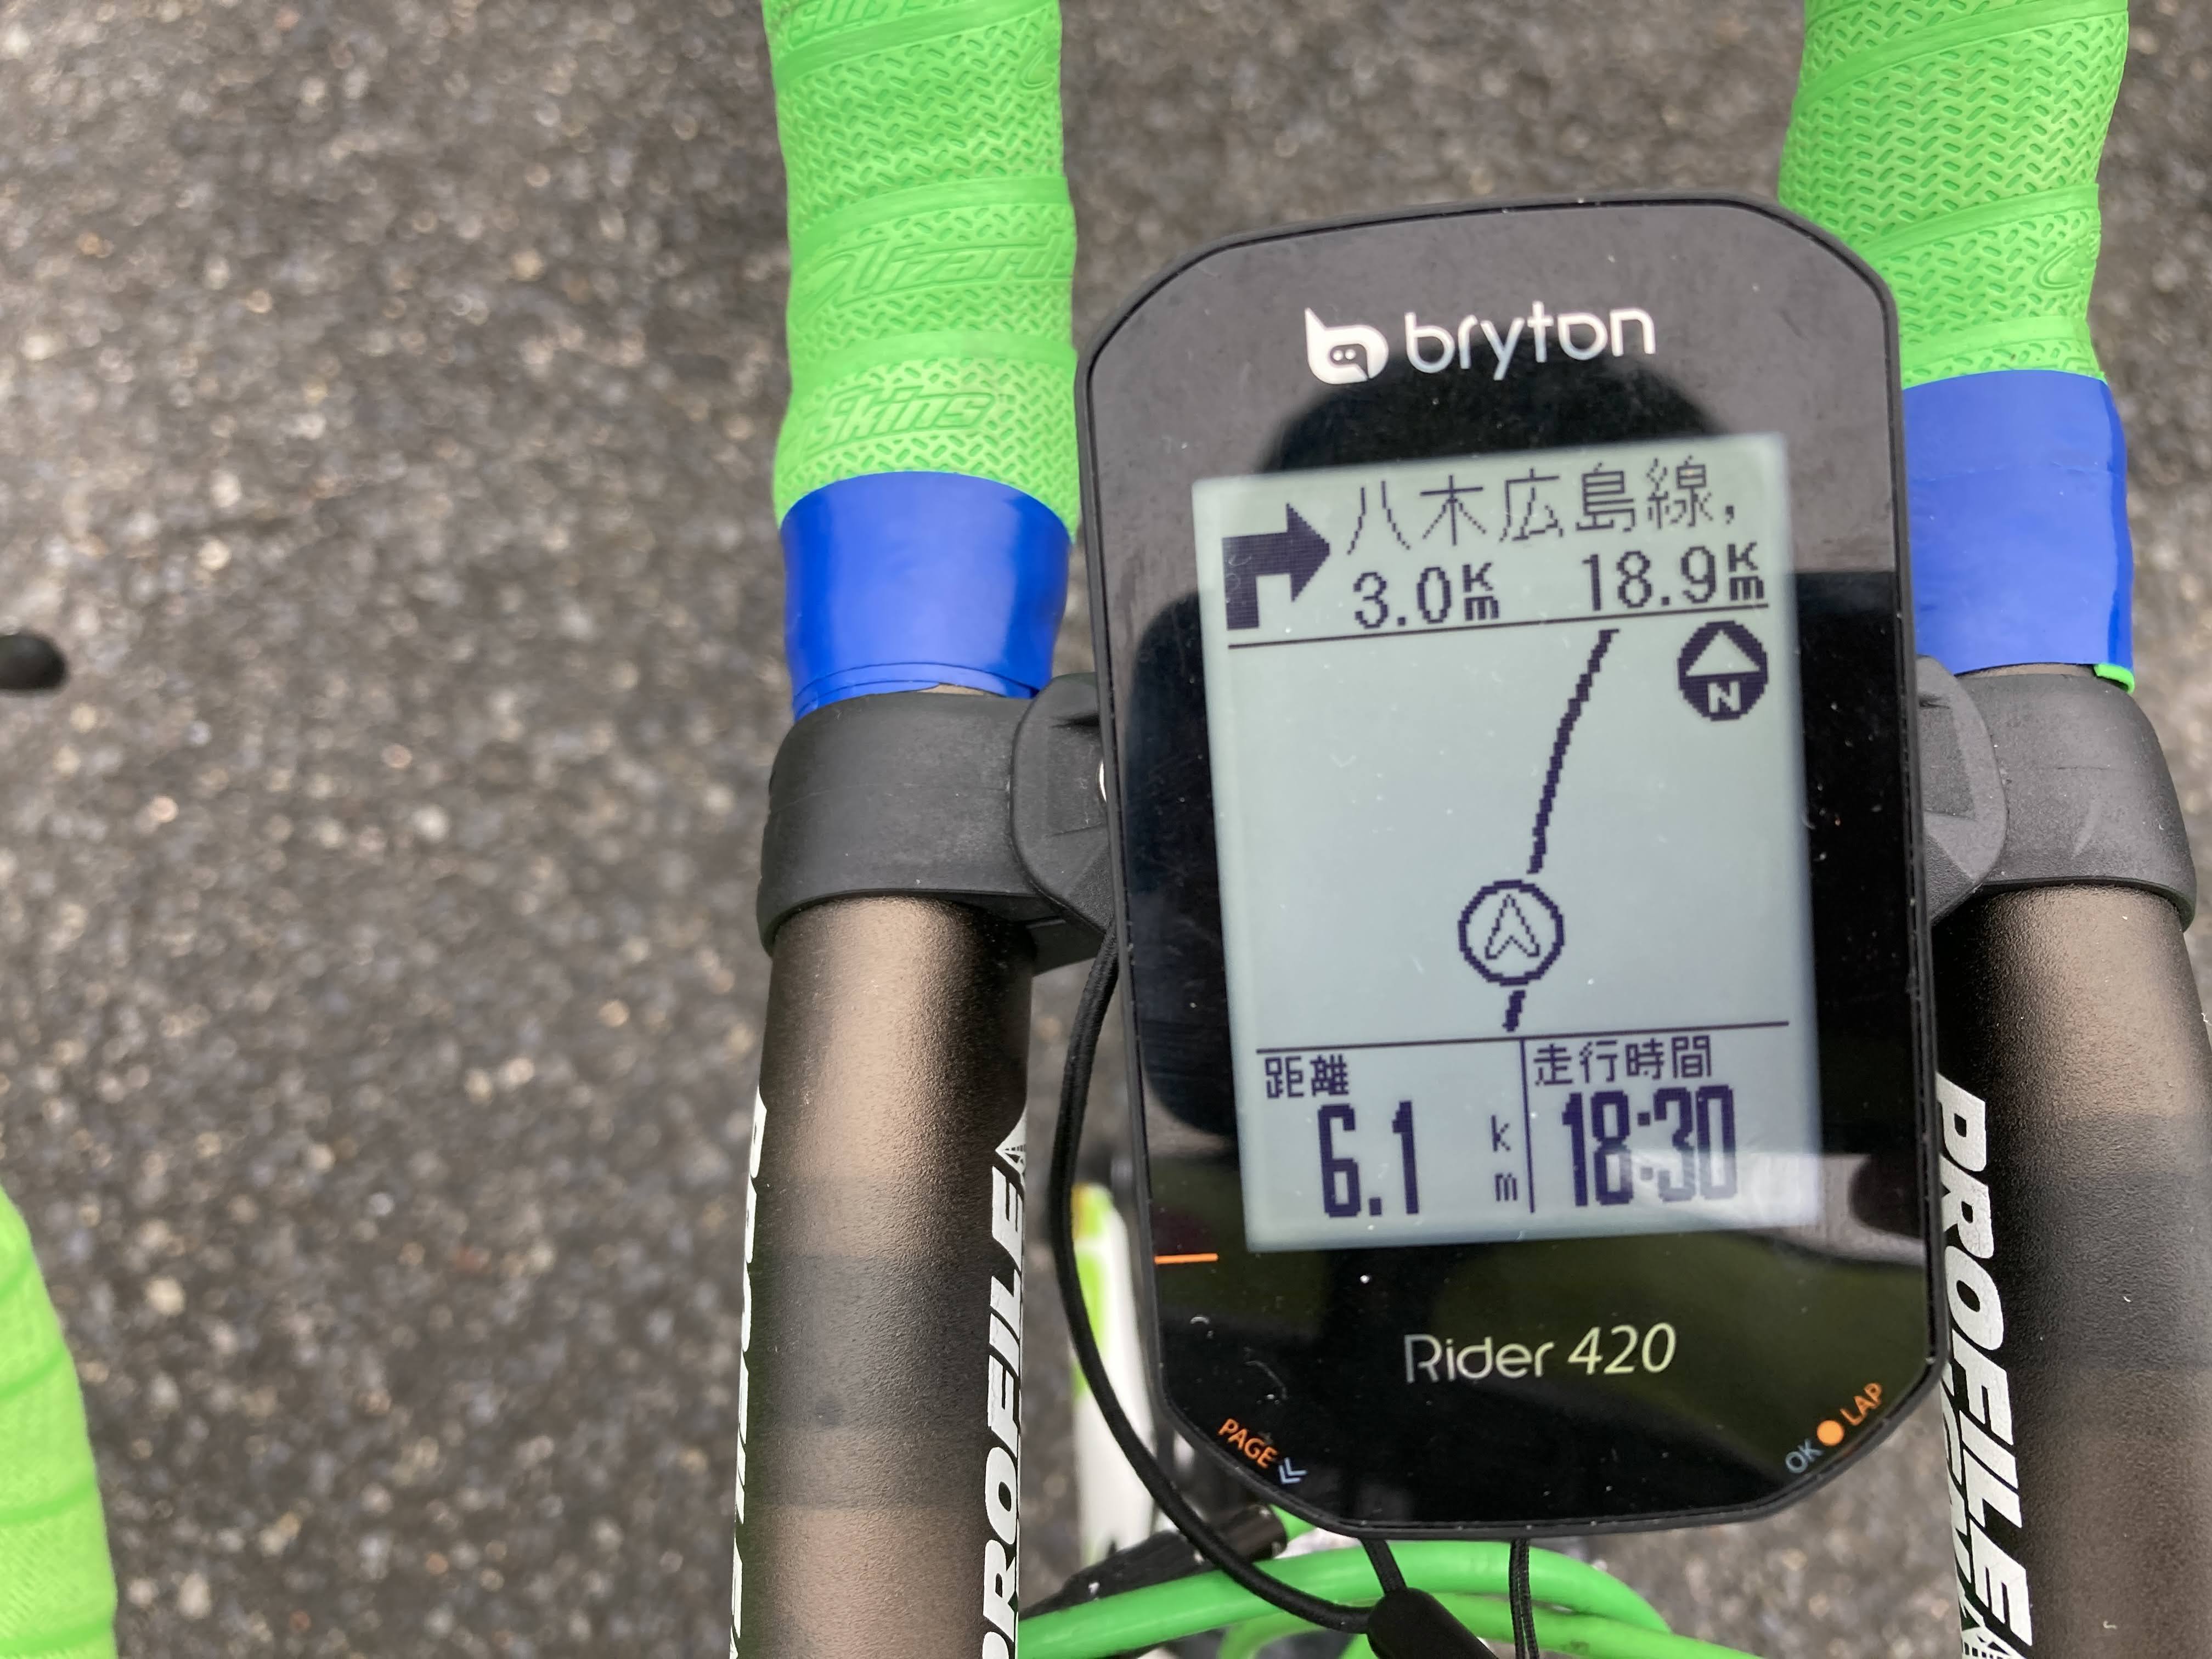 GPSサイクルコンピューター「bryton Rider420」を導入 - バイクグッズ 